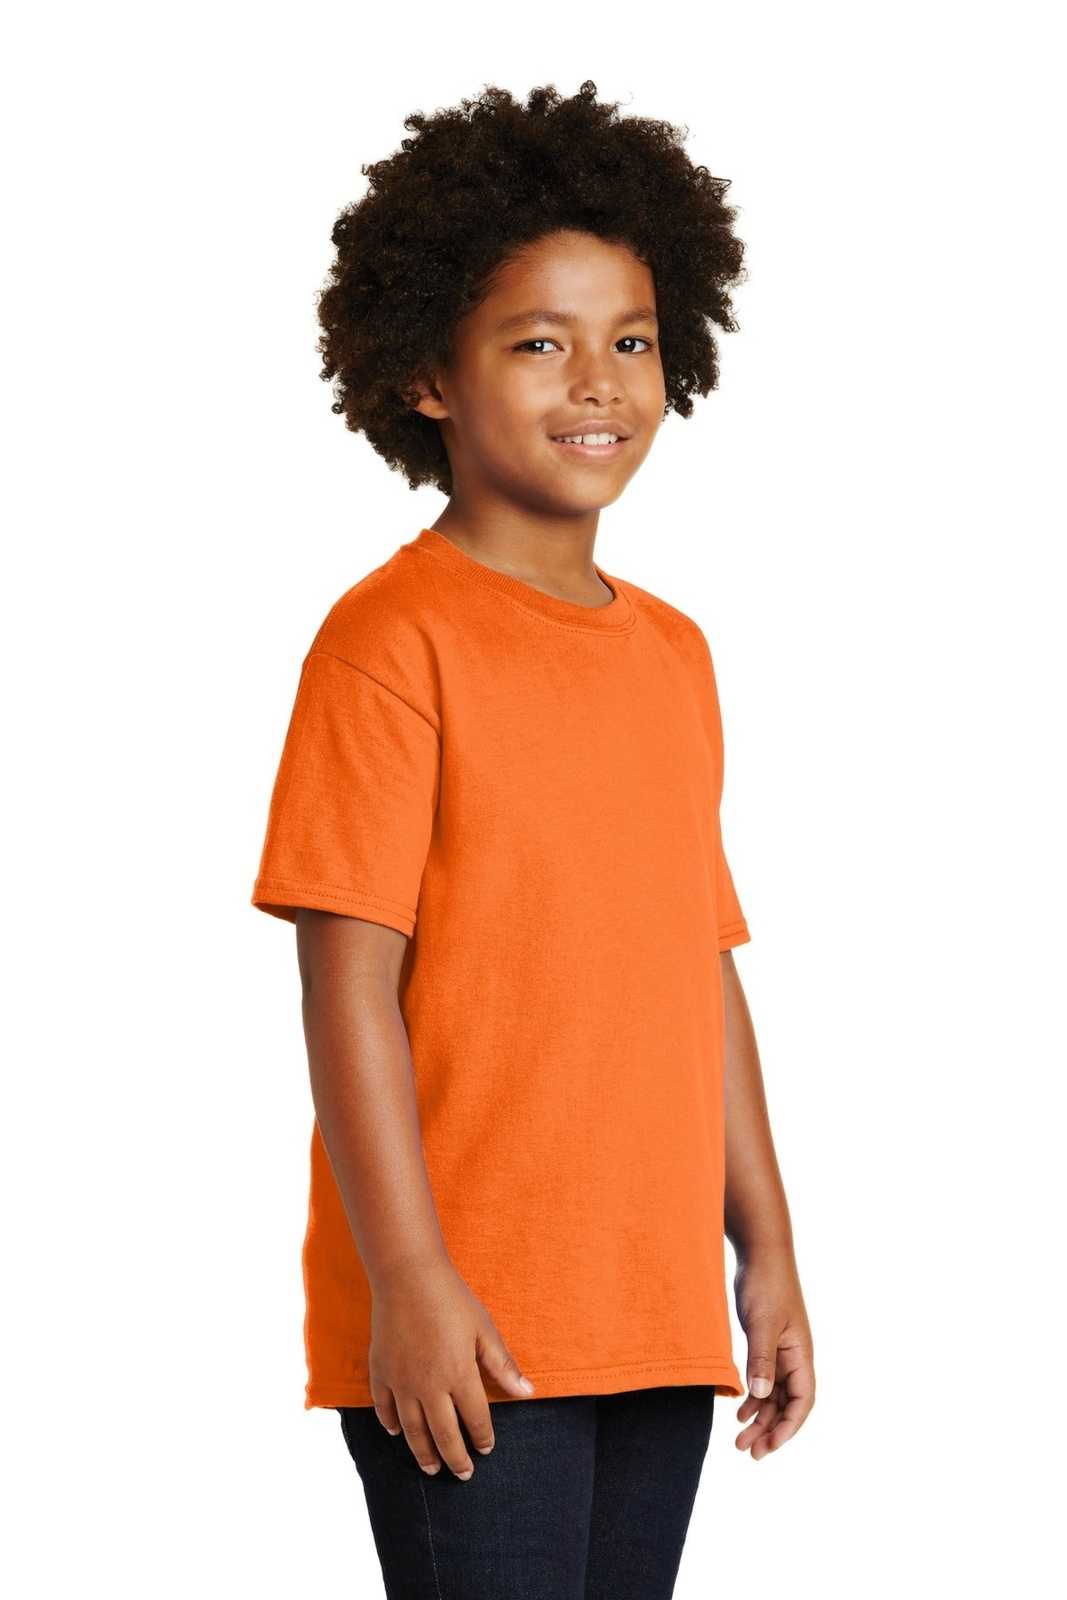 Gildan 2000B Youth Ultra Cotton 100% Cotton T-Shirt - S. Orange - HIT a Double